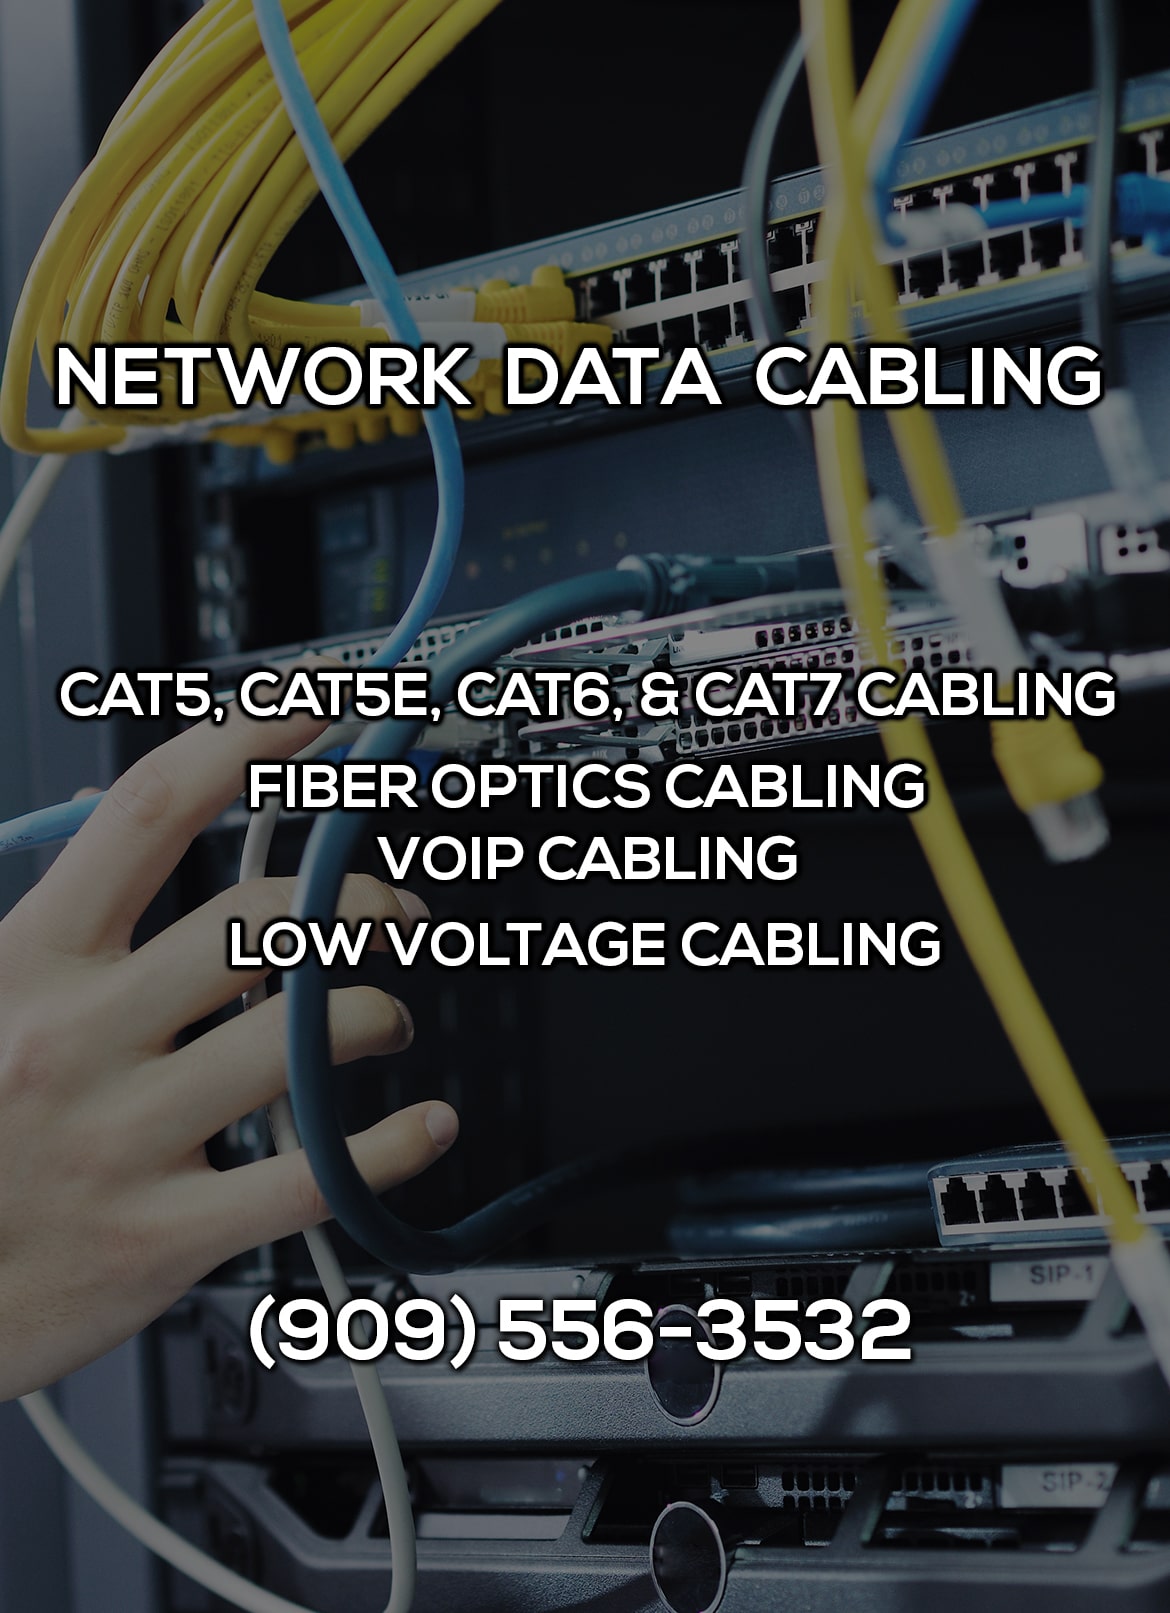 Network Data Cabling in Coachella CA